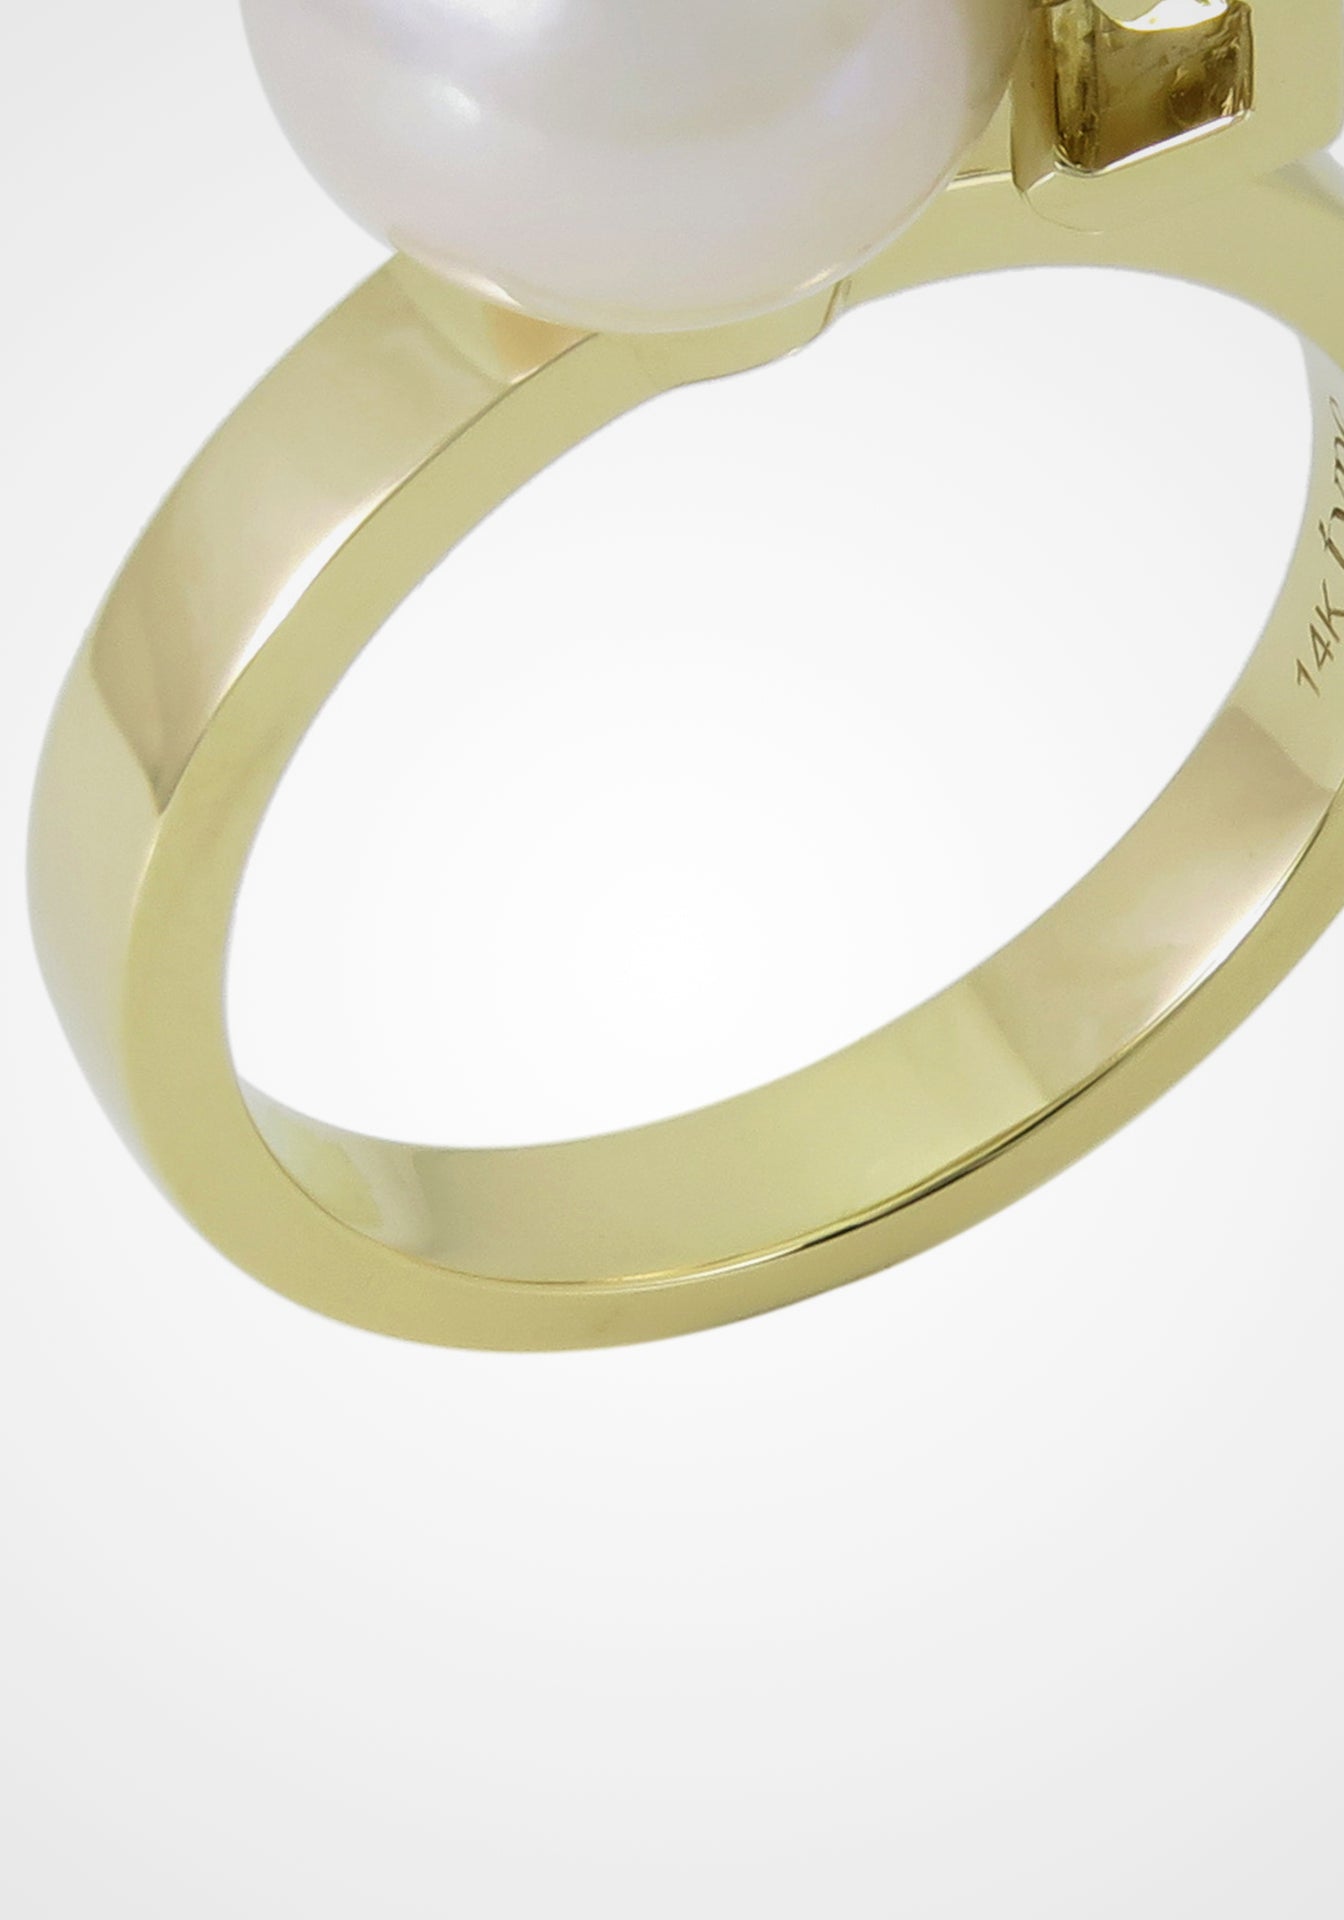 Pierced, 14K Yellow Gold, Pearl + Diamond Ring